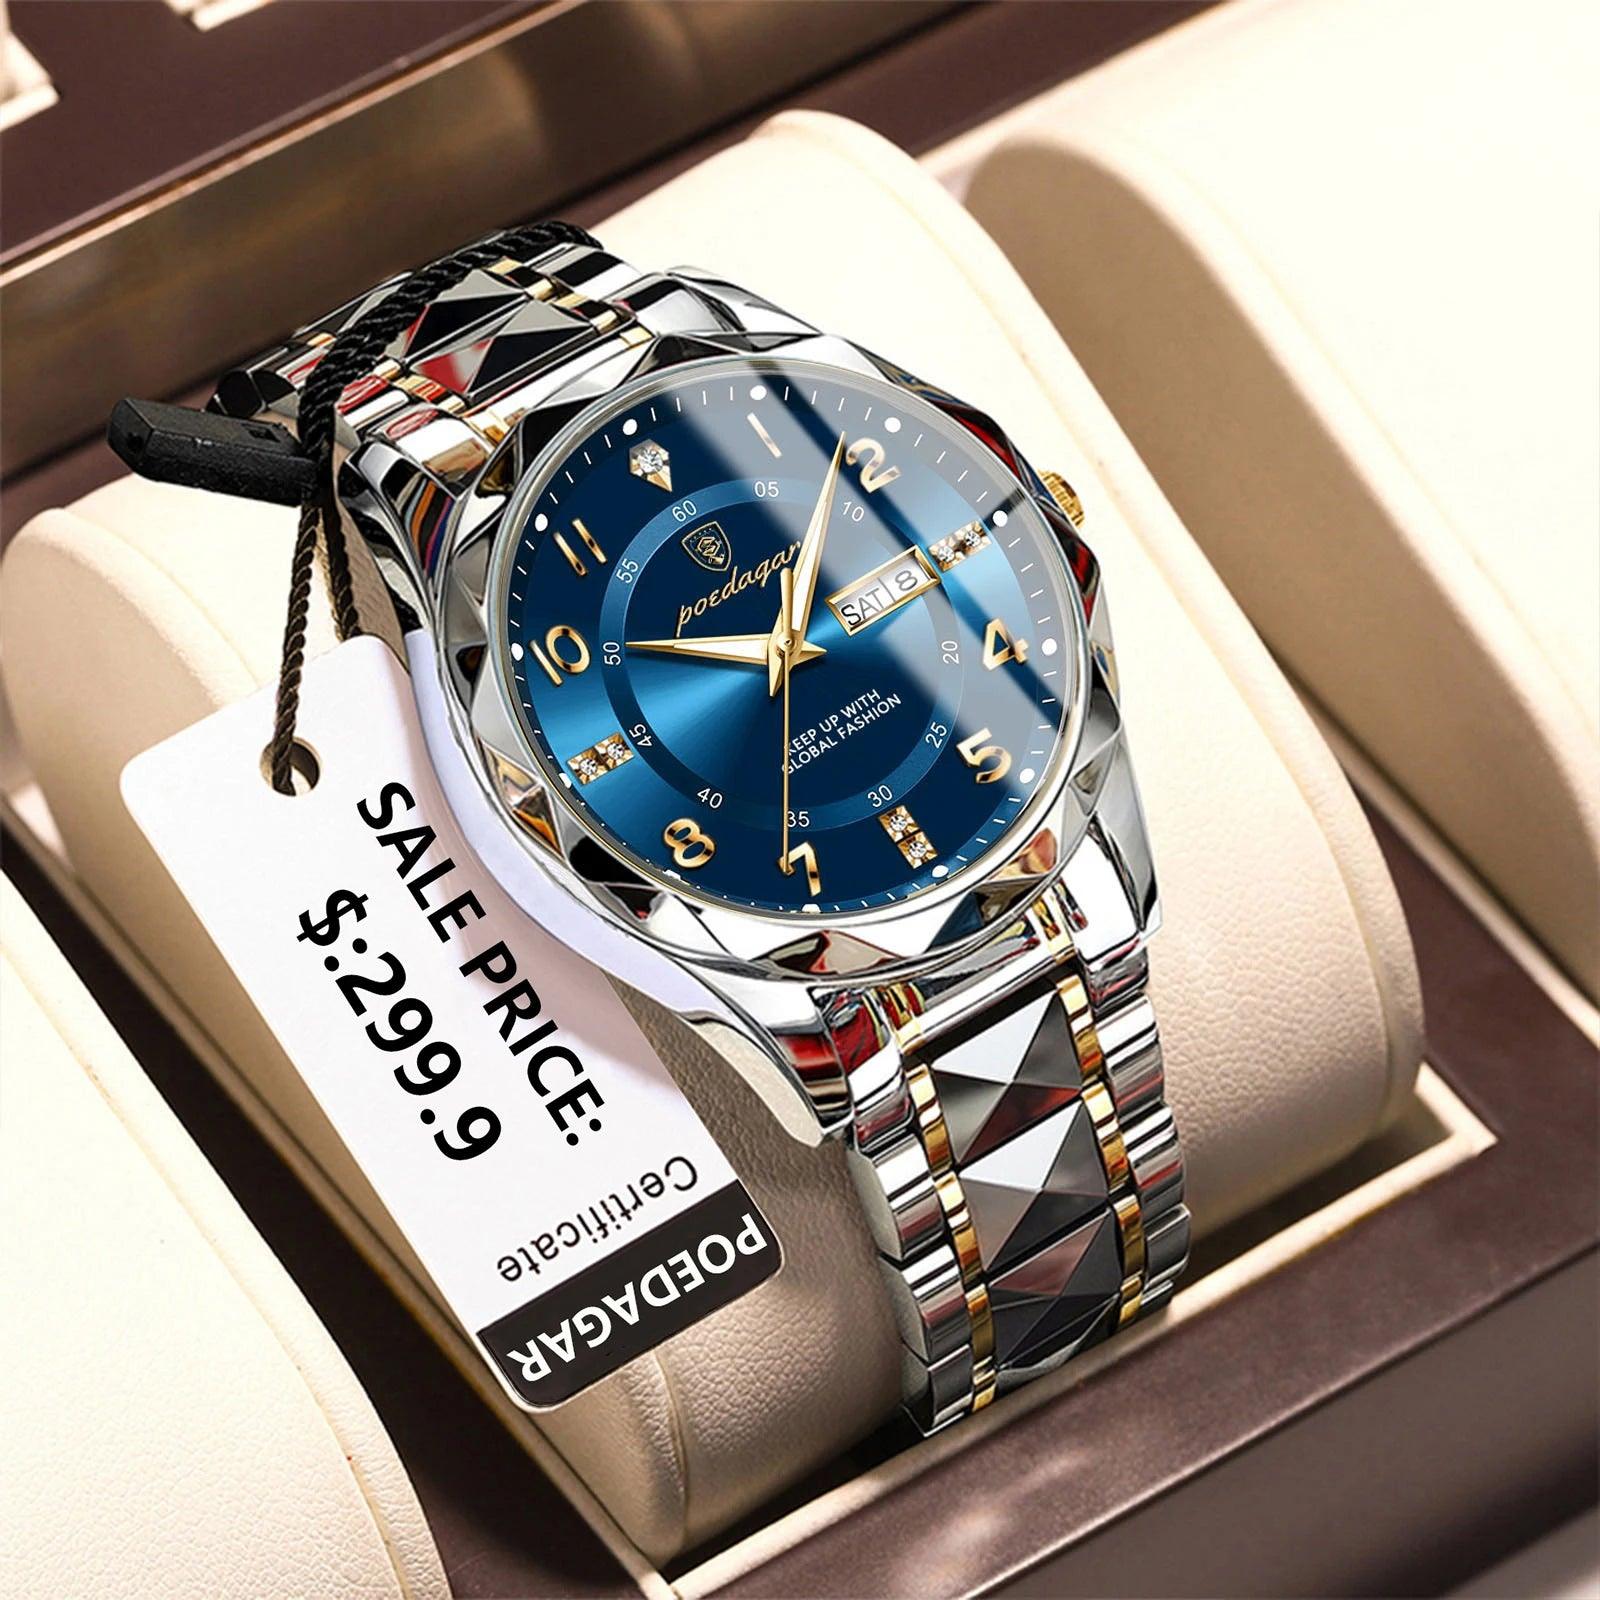 POEDAGAR Premium Stainless Steel Men's Sports Watch with Luminous Date Week Display, Waterproof Quartz Wristwatch + Gift Box  ourlum.com   